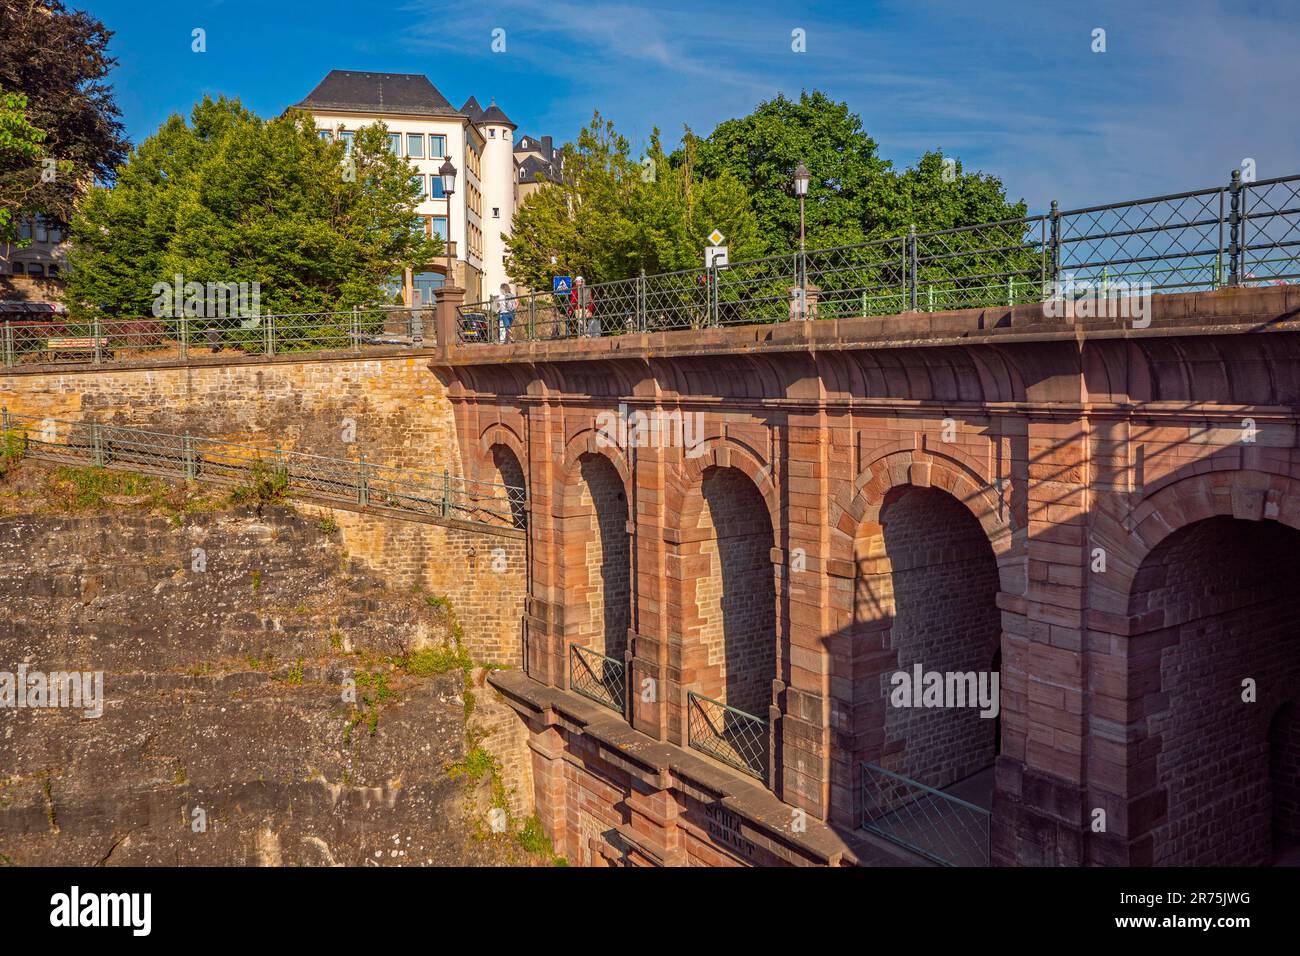 Castle Bridge, Luxembourg City, Benelux, pays du Benelux, Luxembourg Banque D'Images